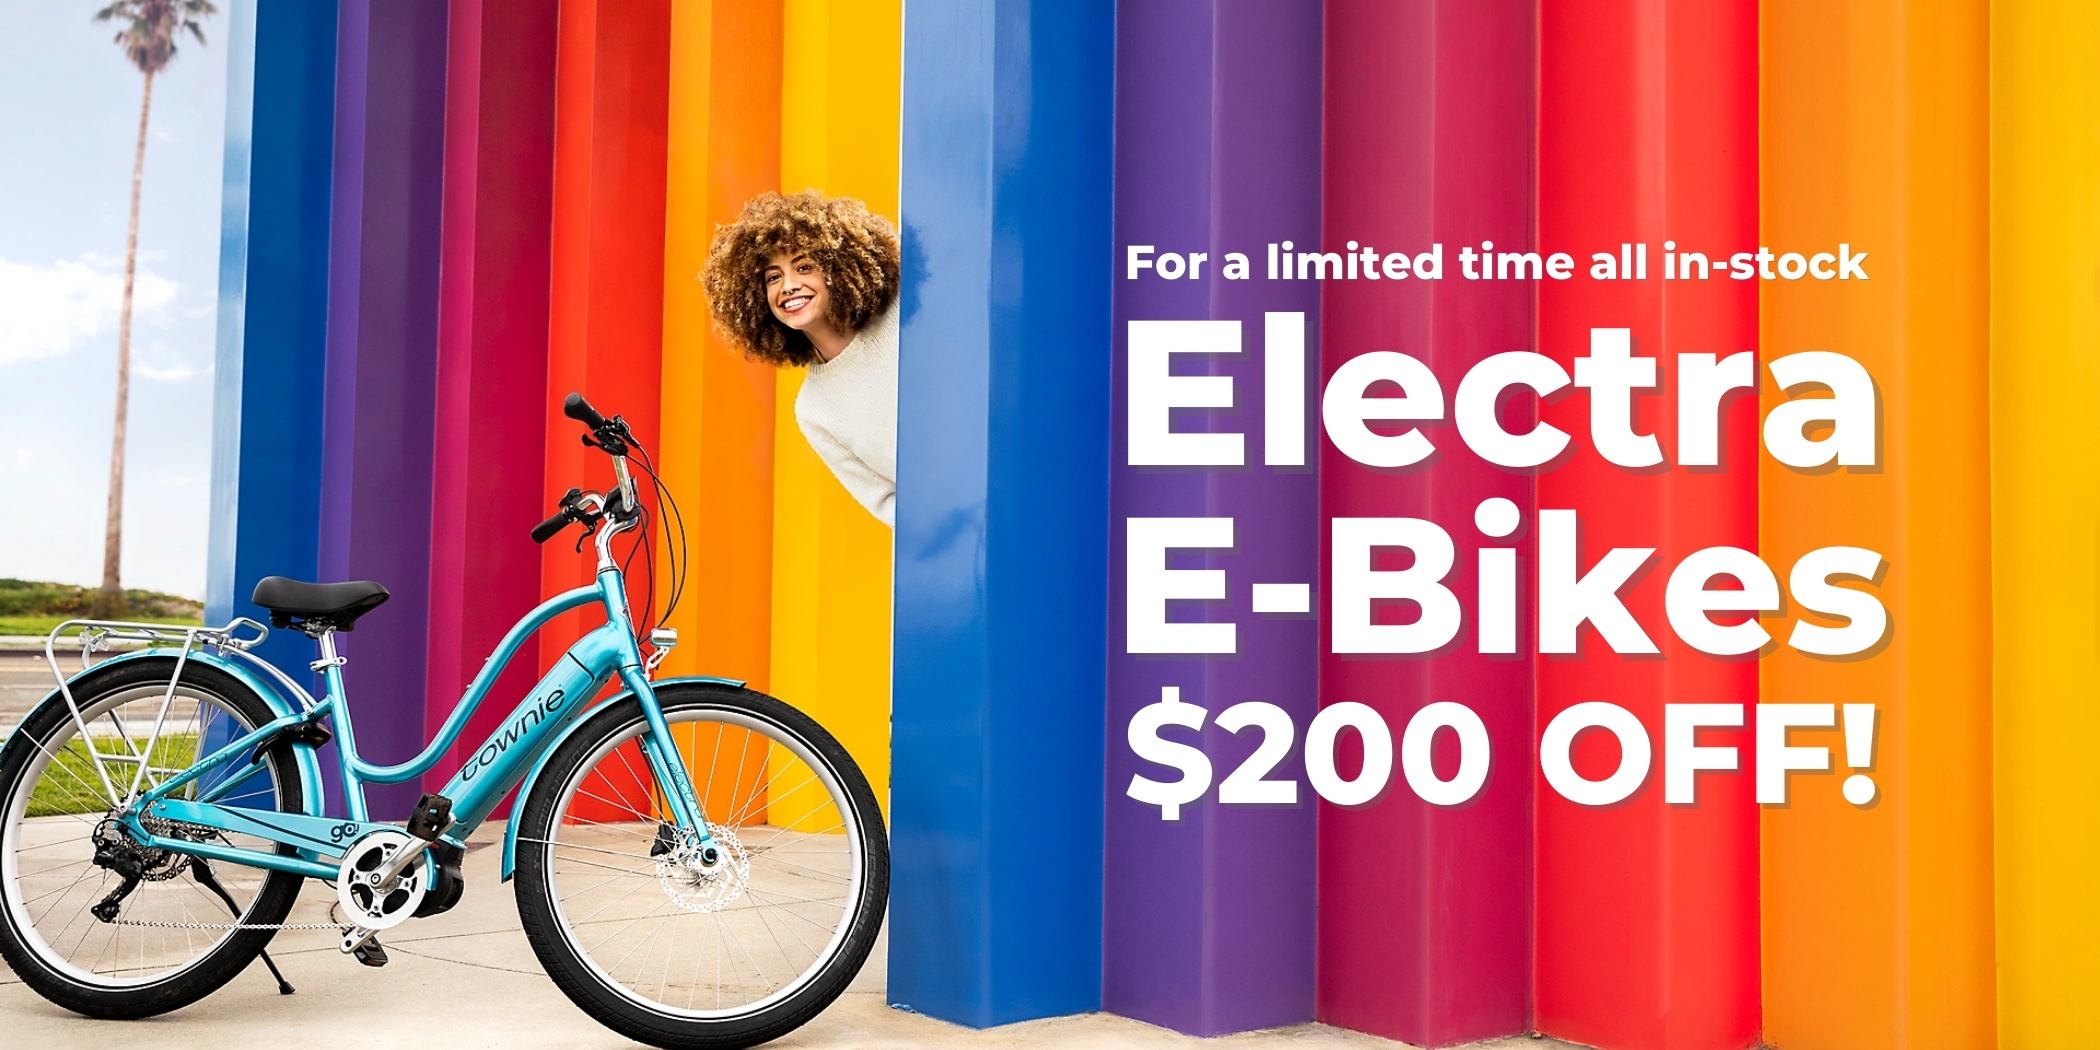 All in-stock Electra E-Bikes $200 OFF!